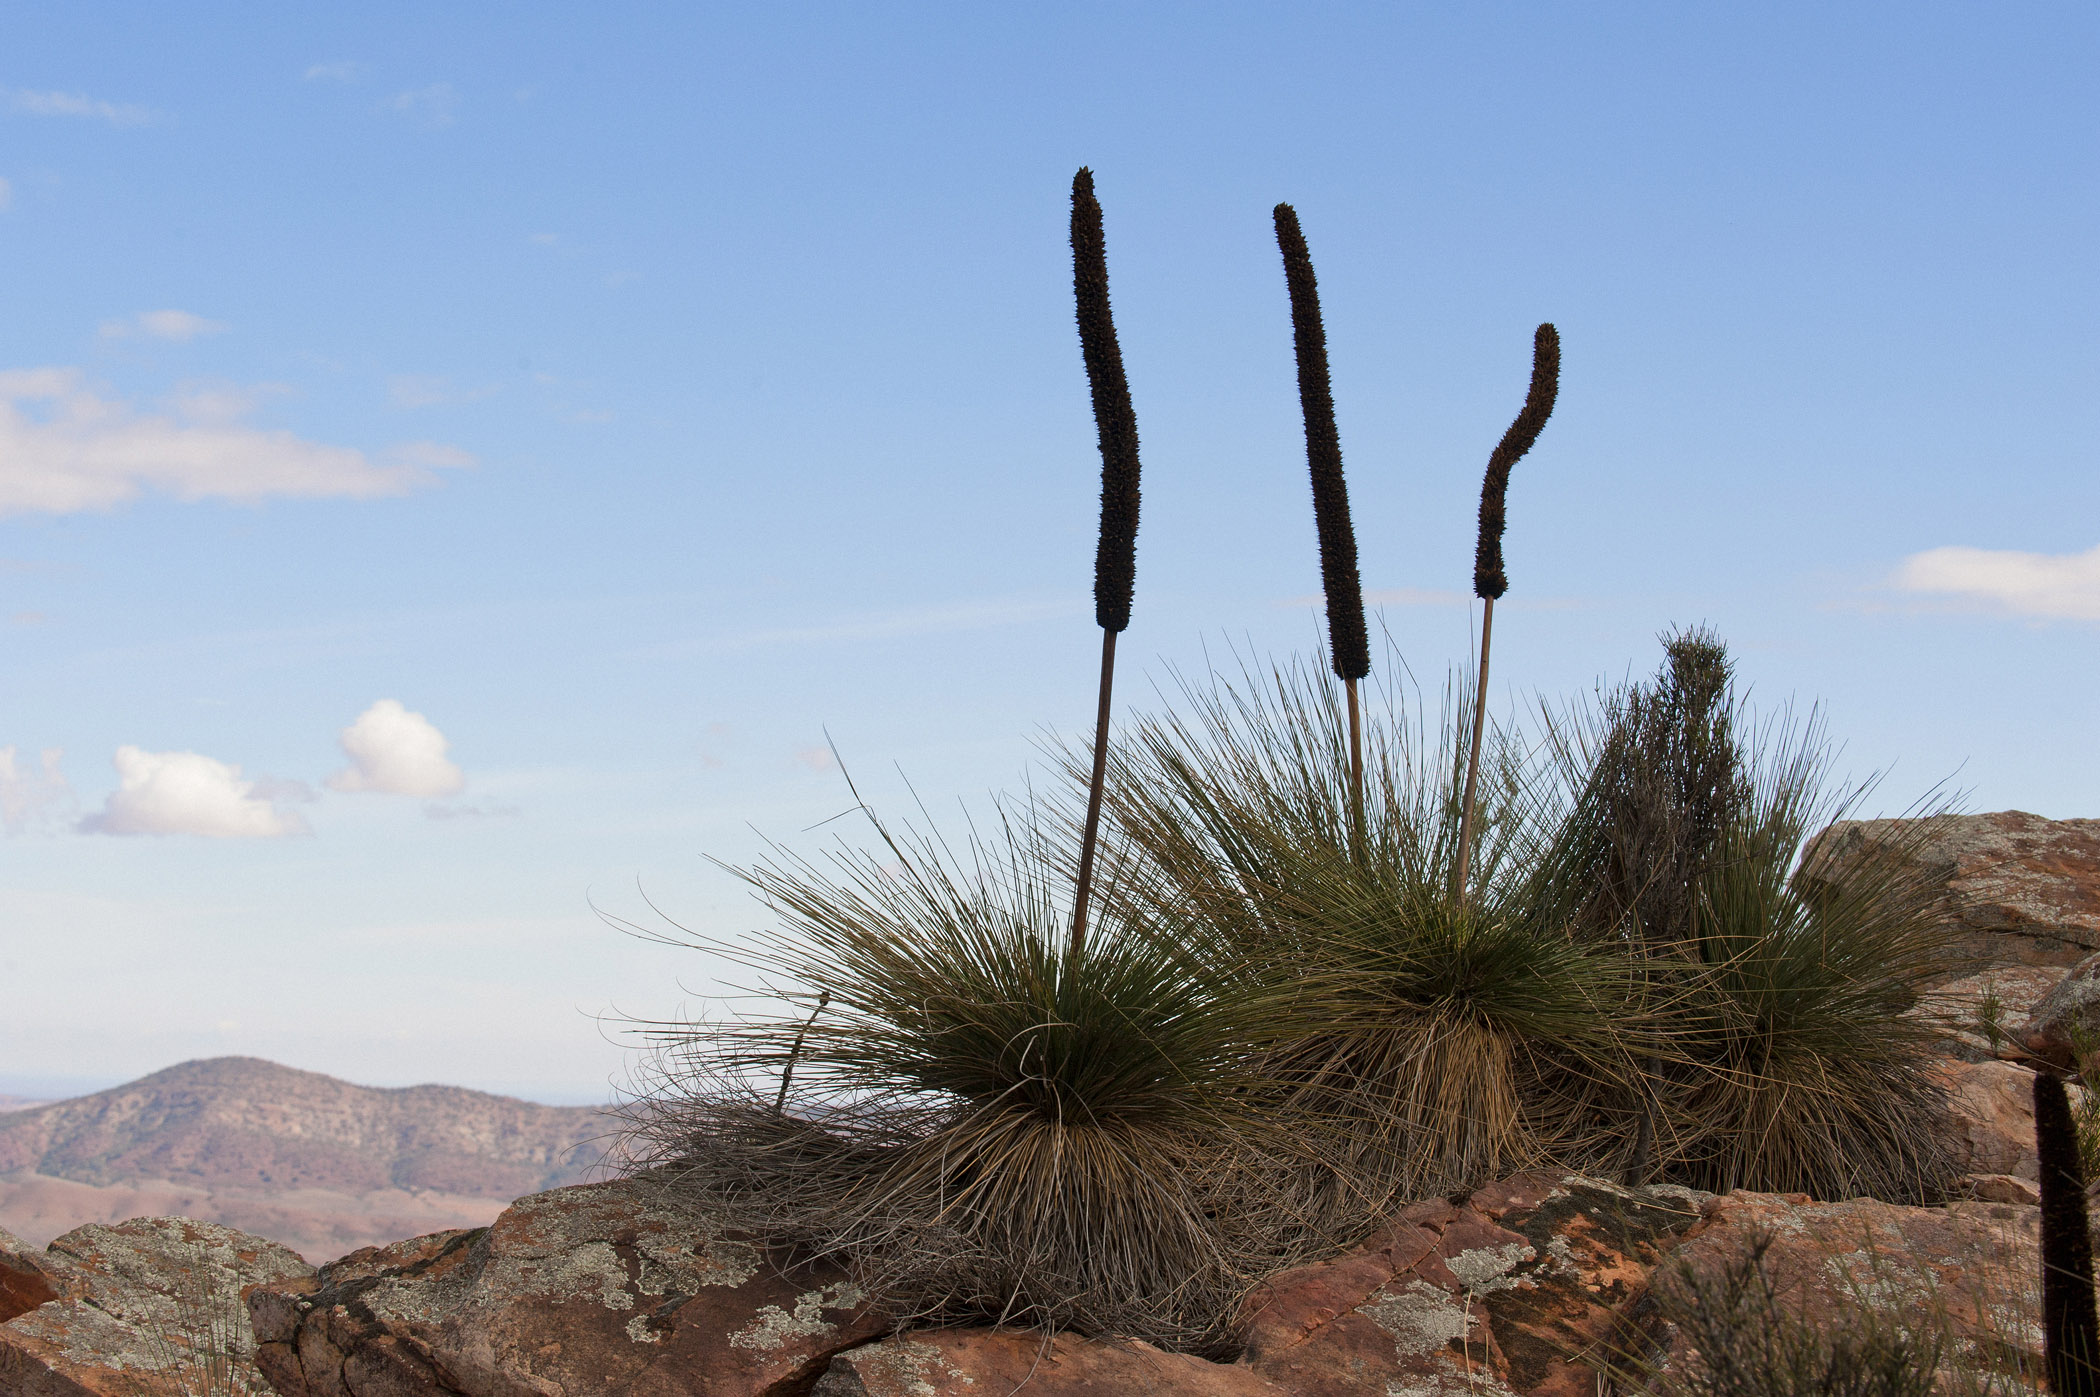 View of Distant hills in the Flinders Ranges